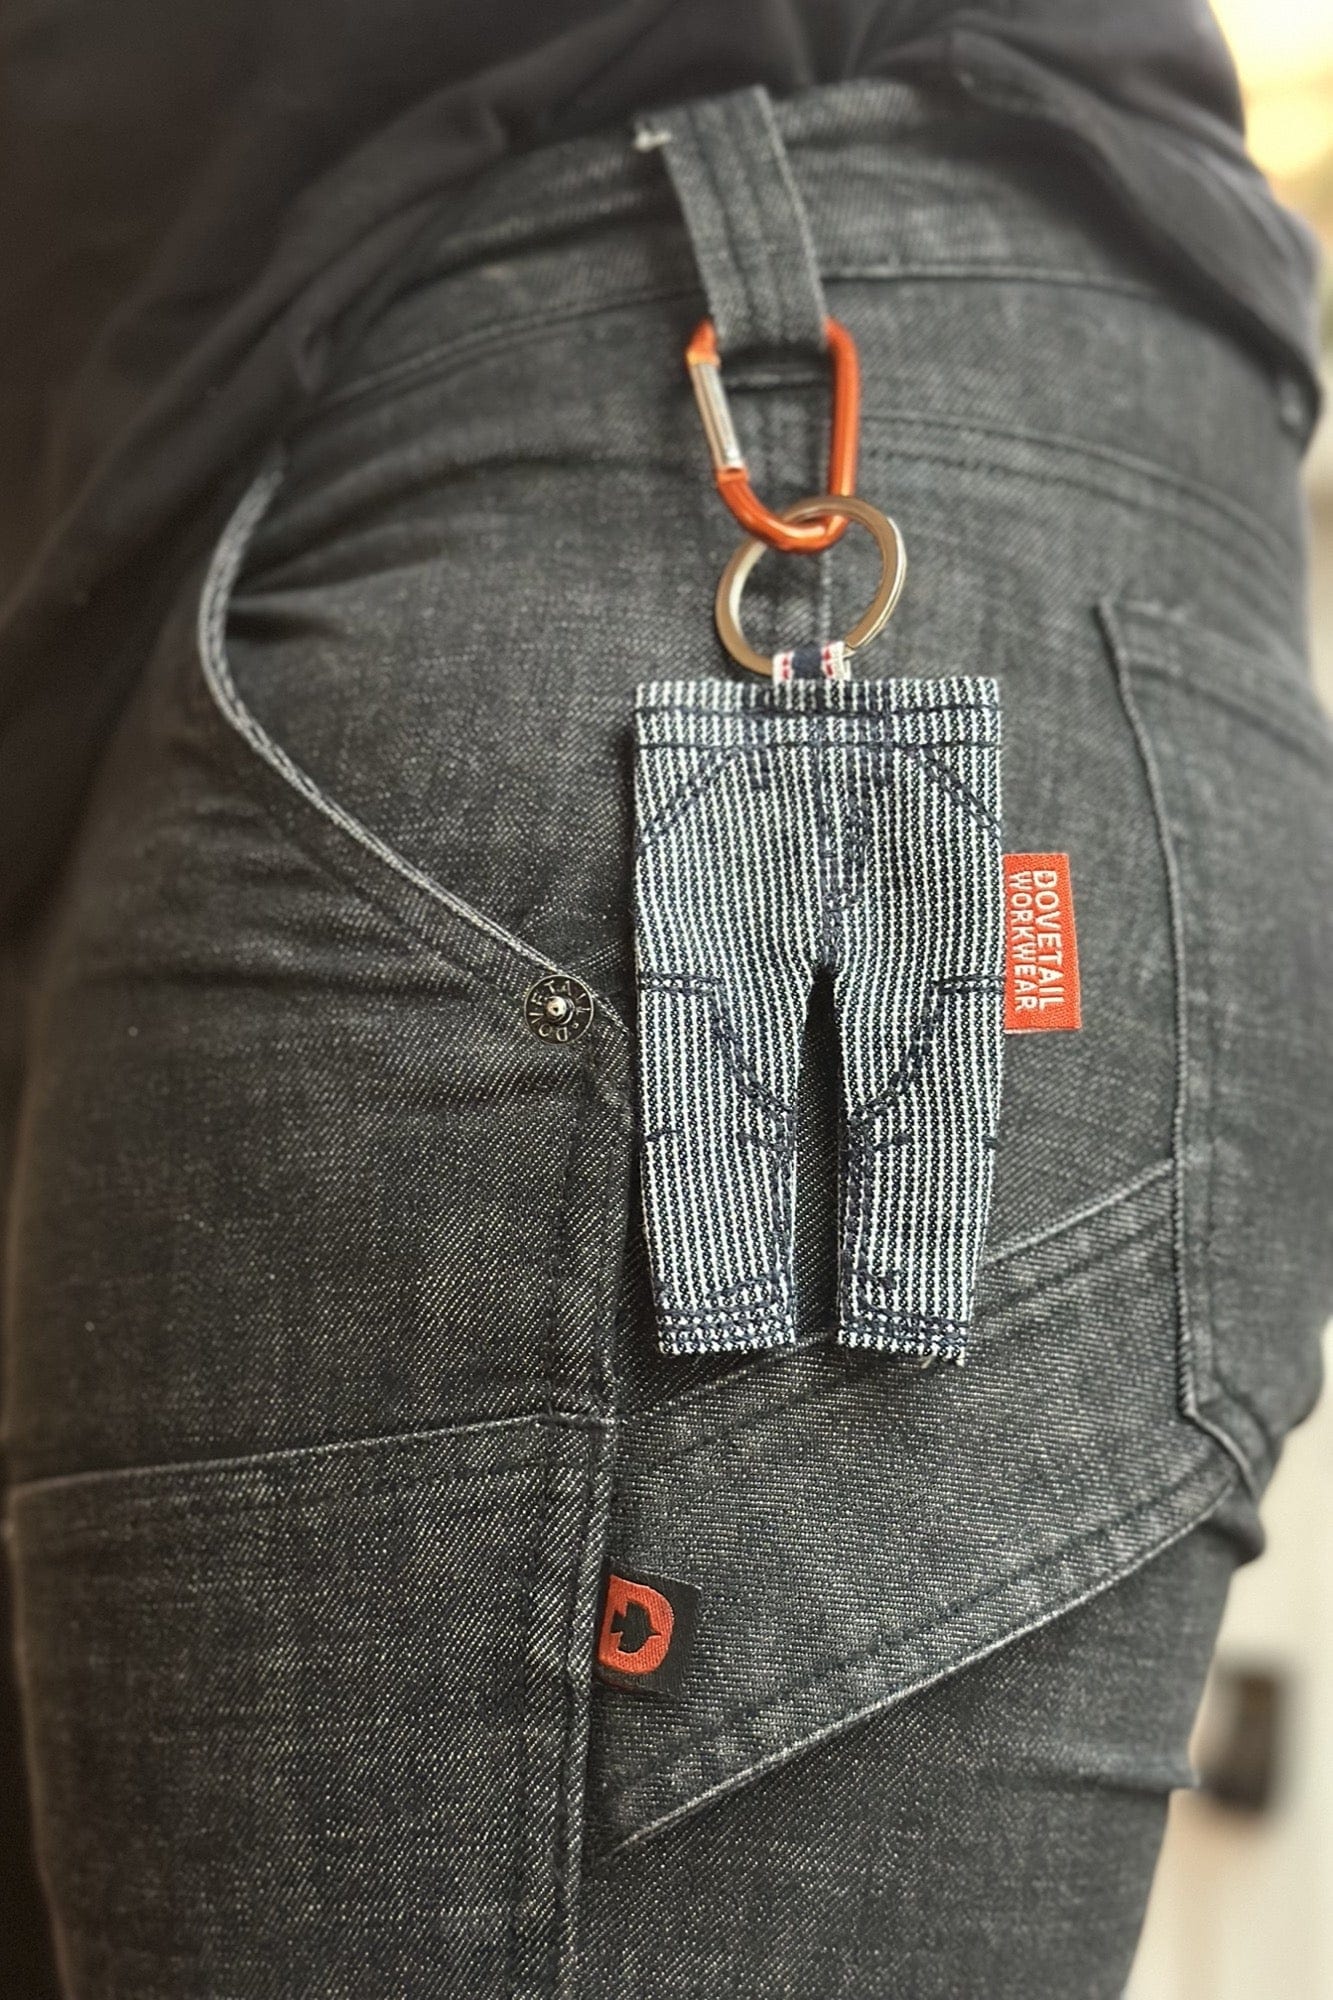 Tiny Pants Keychain Gift Dovetail Workwear